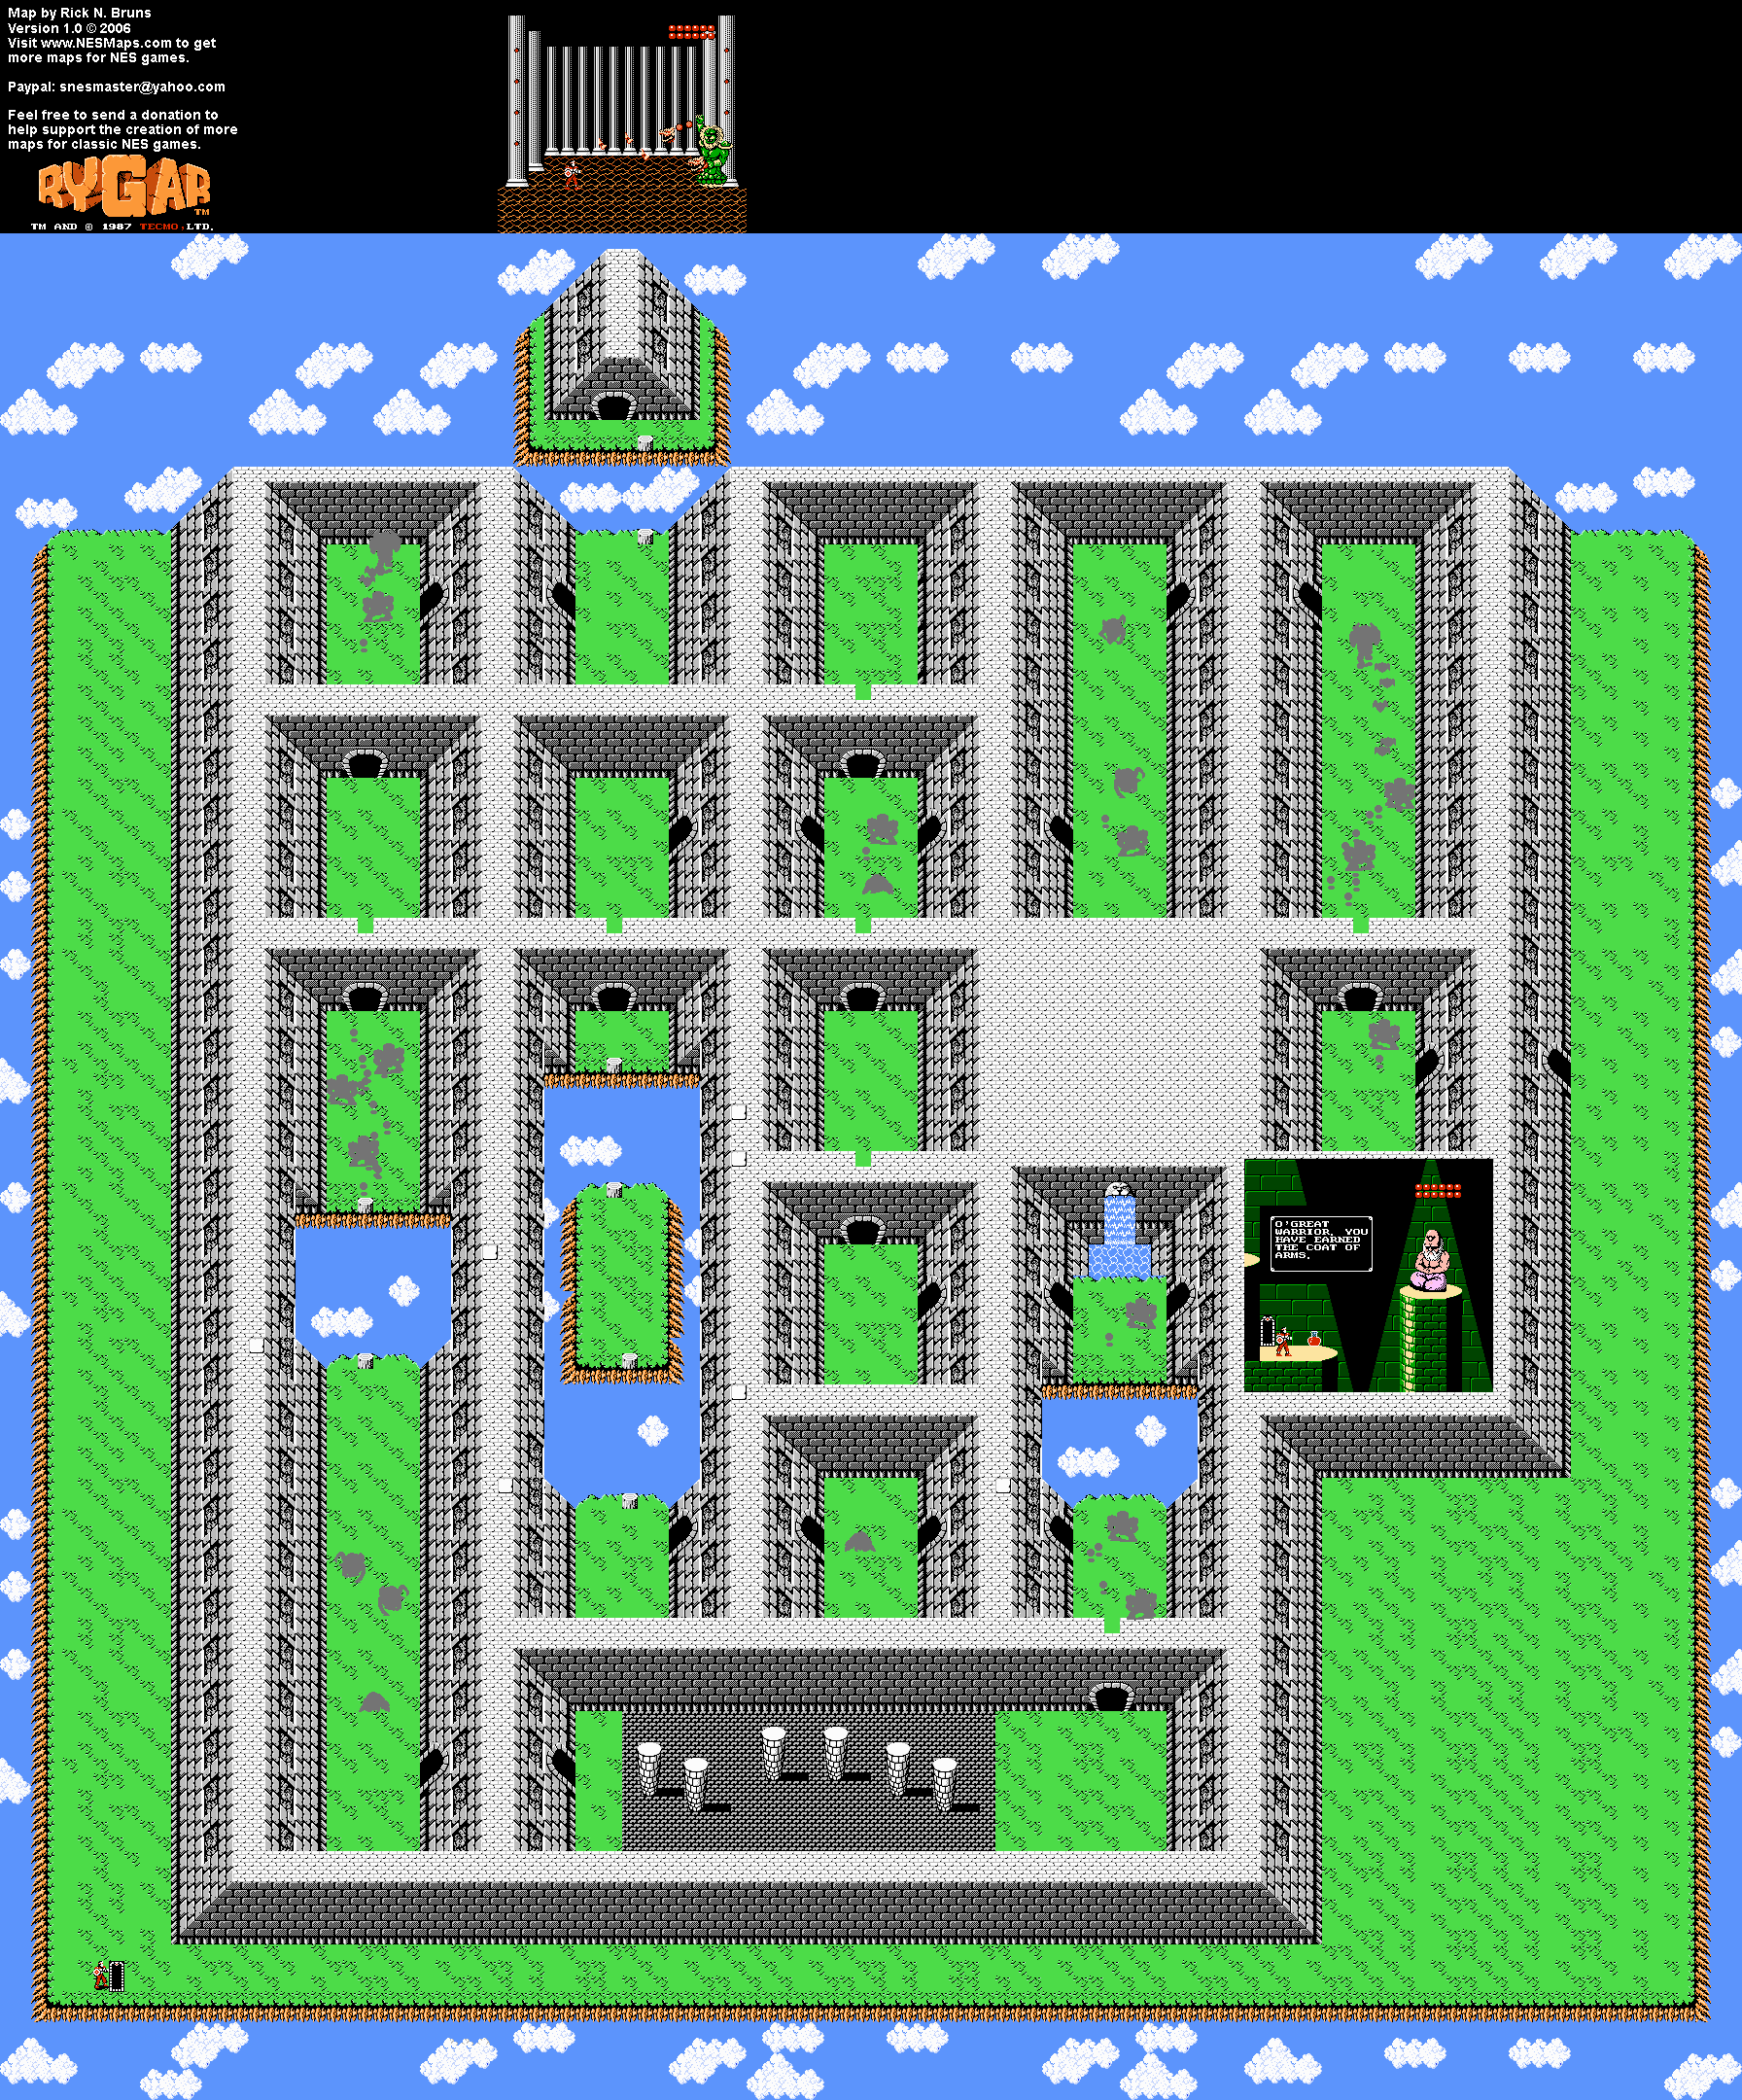 Rygar - Sky Castle - NES Map